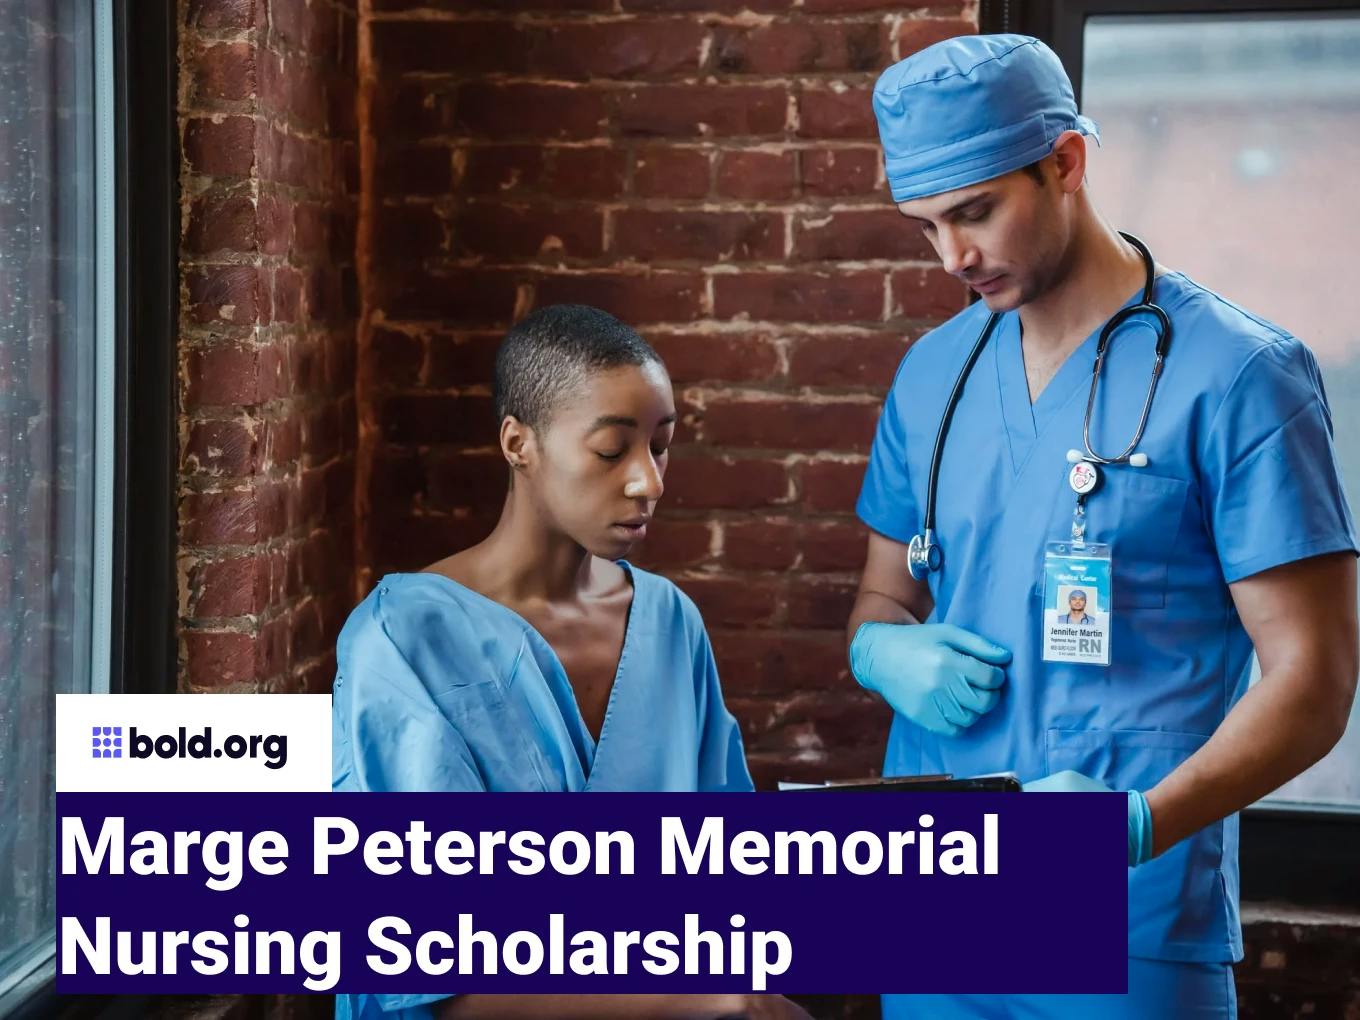 Marge Peterson Memorial Nursing Scholarship